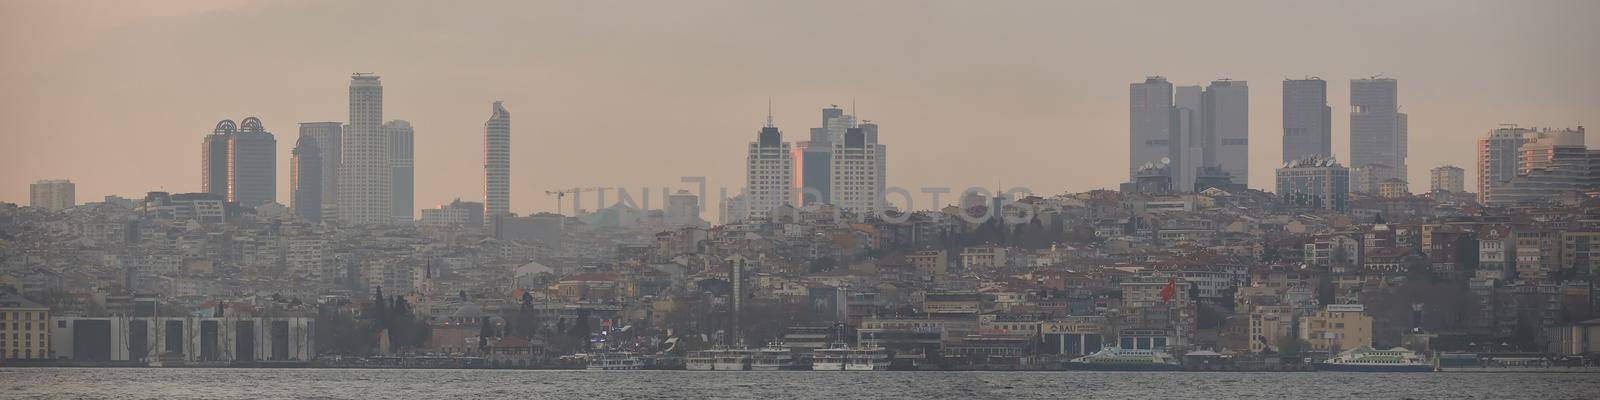 Besiktas coastline, the European side of Istanbul. by sarymsakov